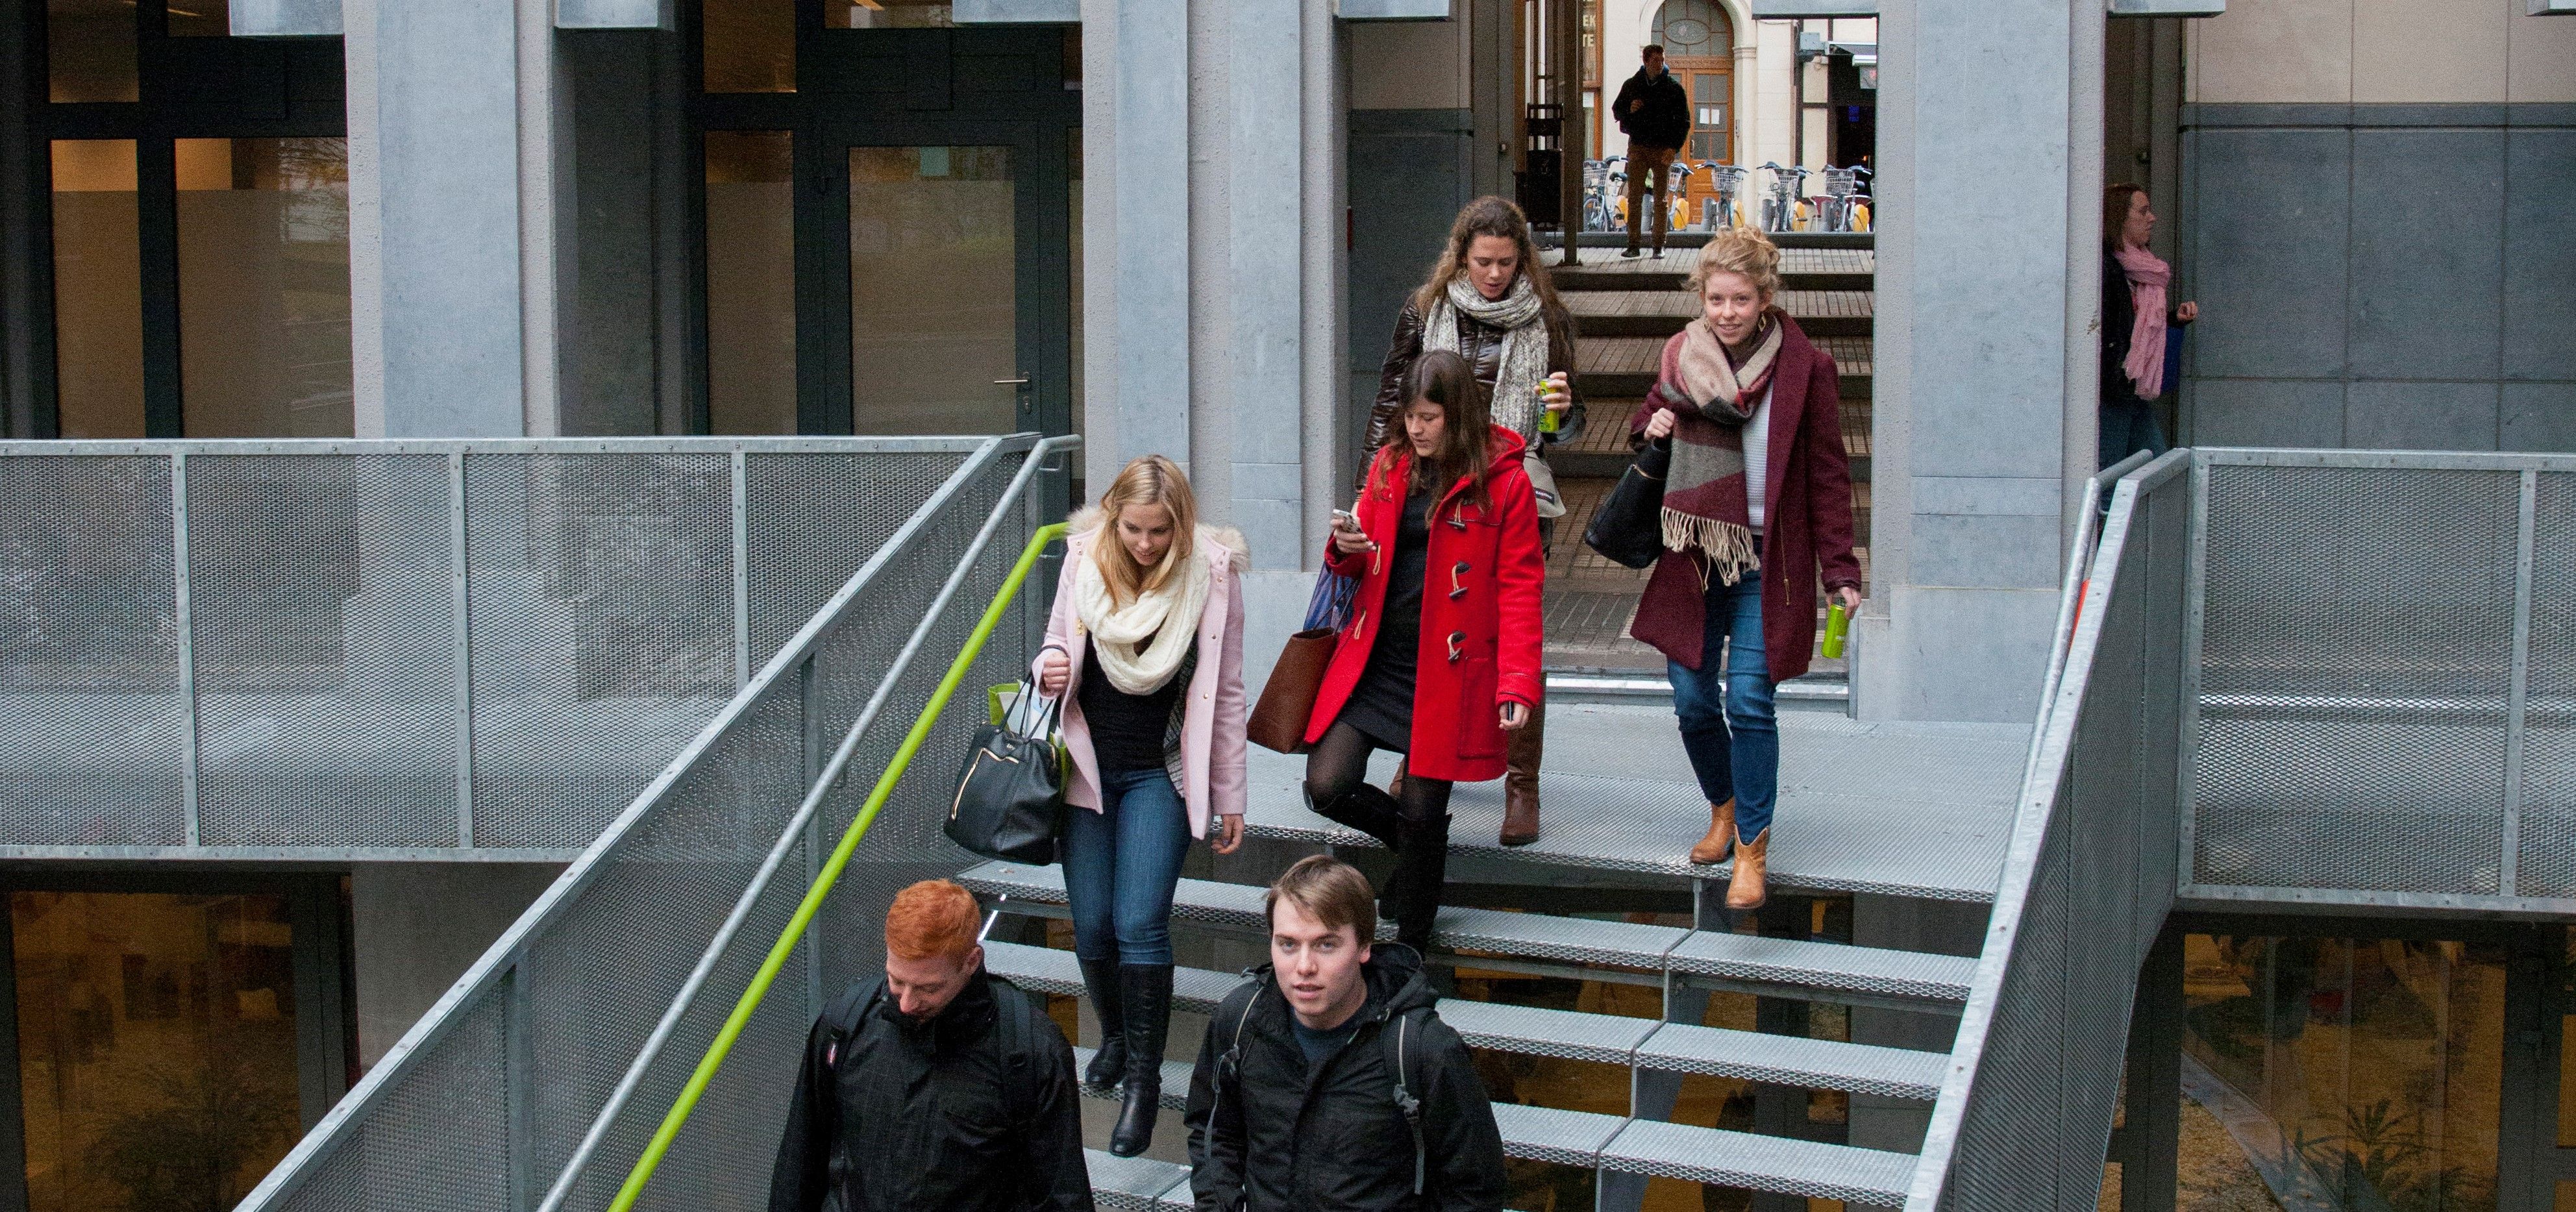 Odisee verwelkomt dit jaar 13 % meer nieuwe studenten op Campus Brussel.